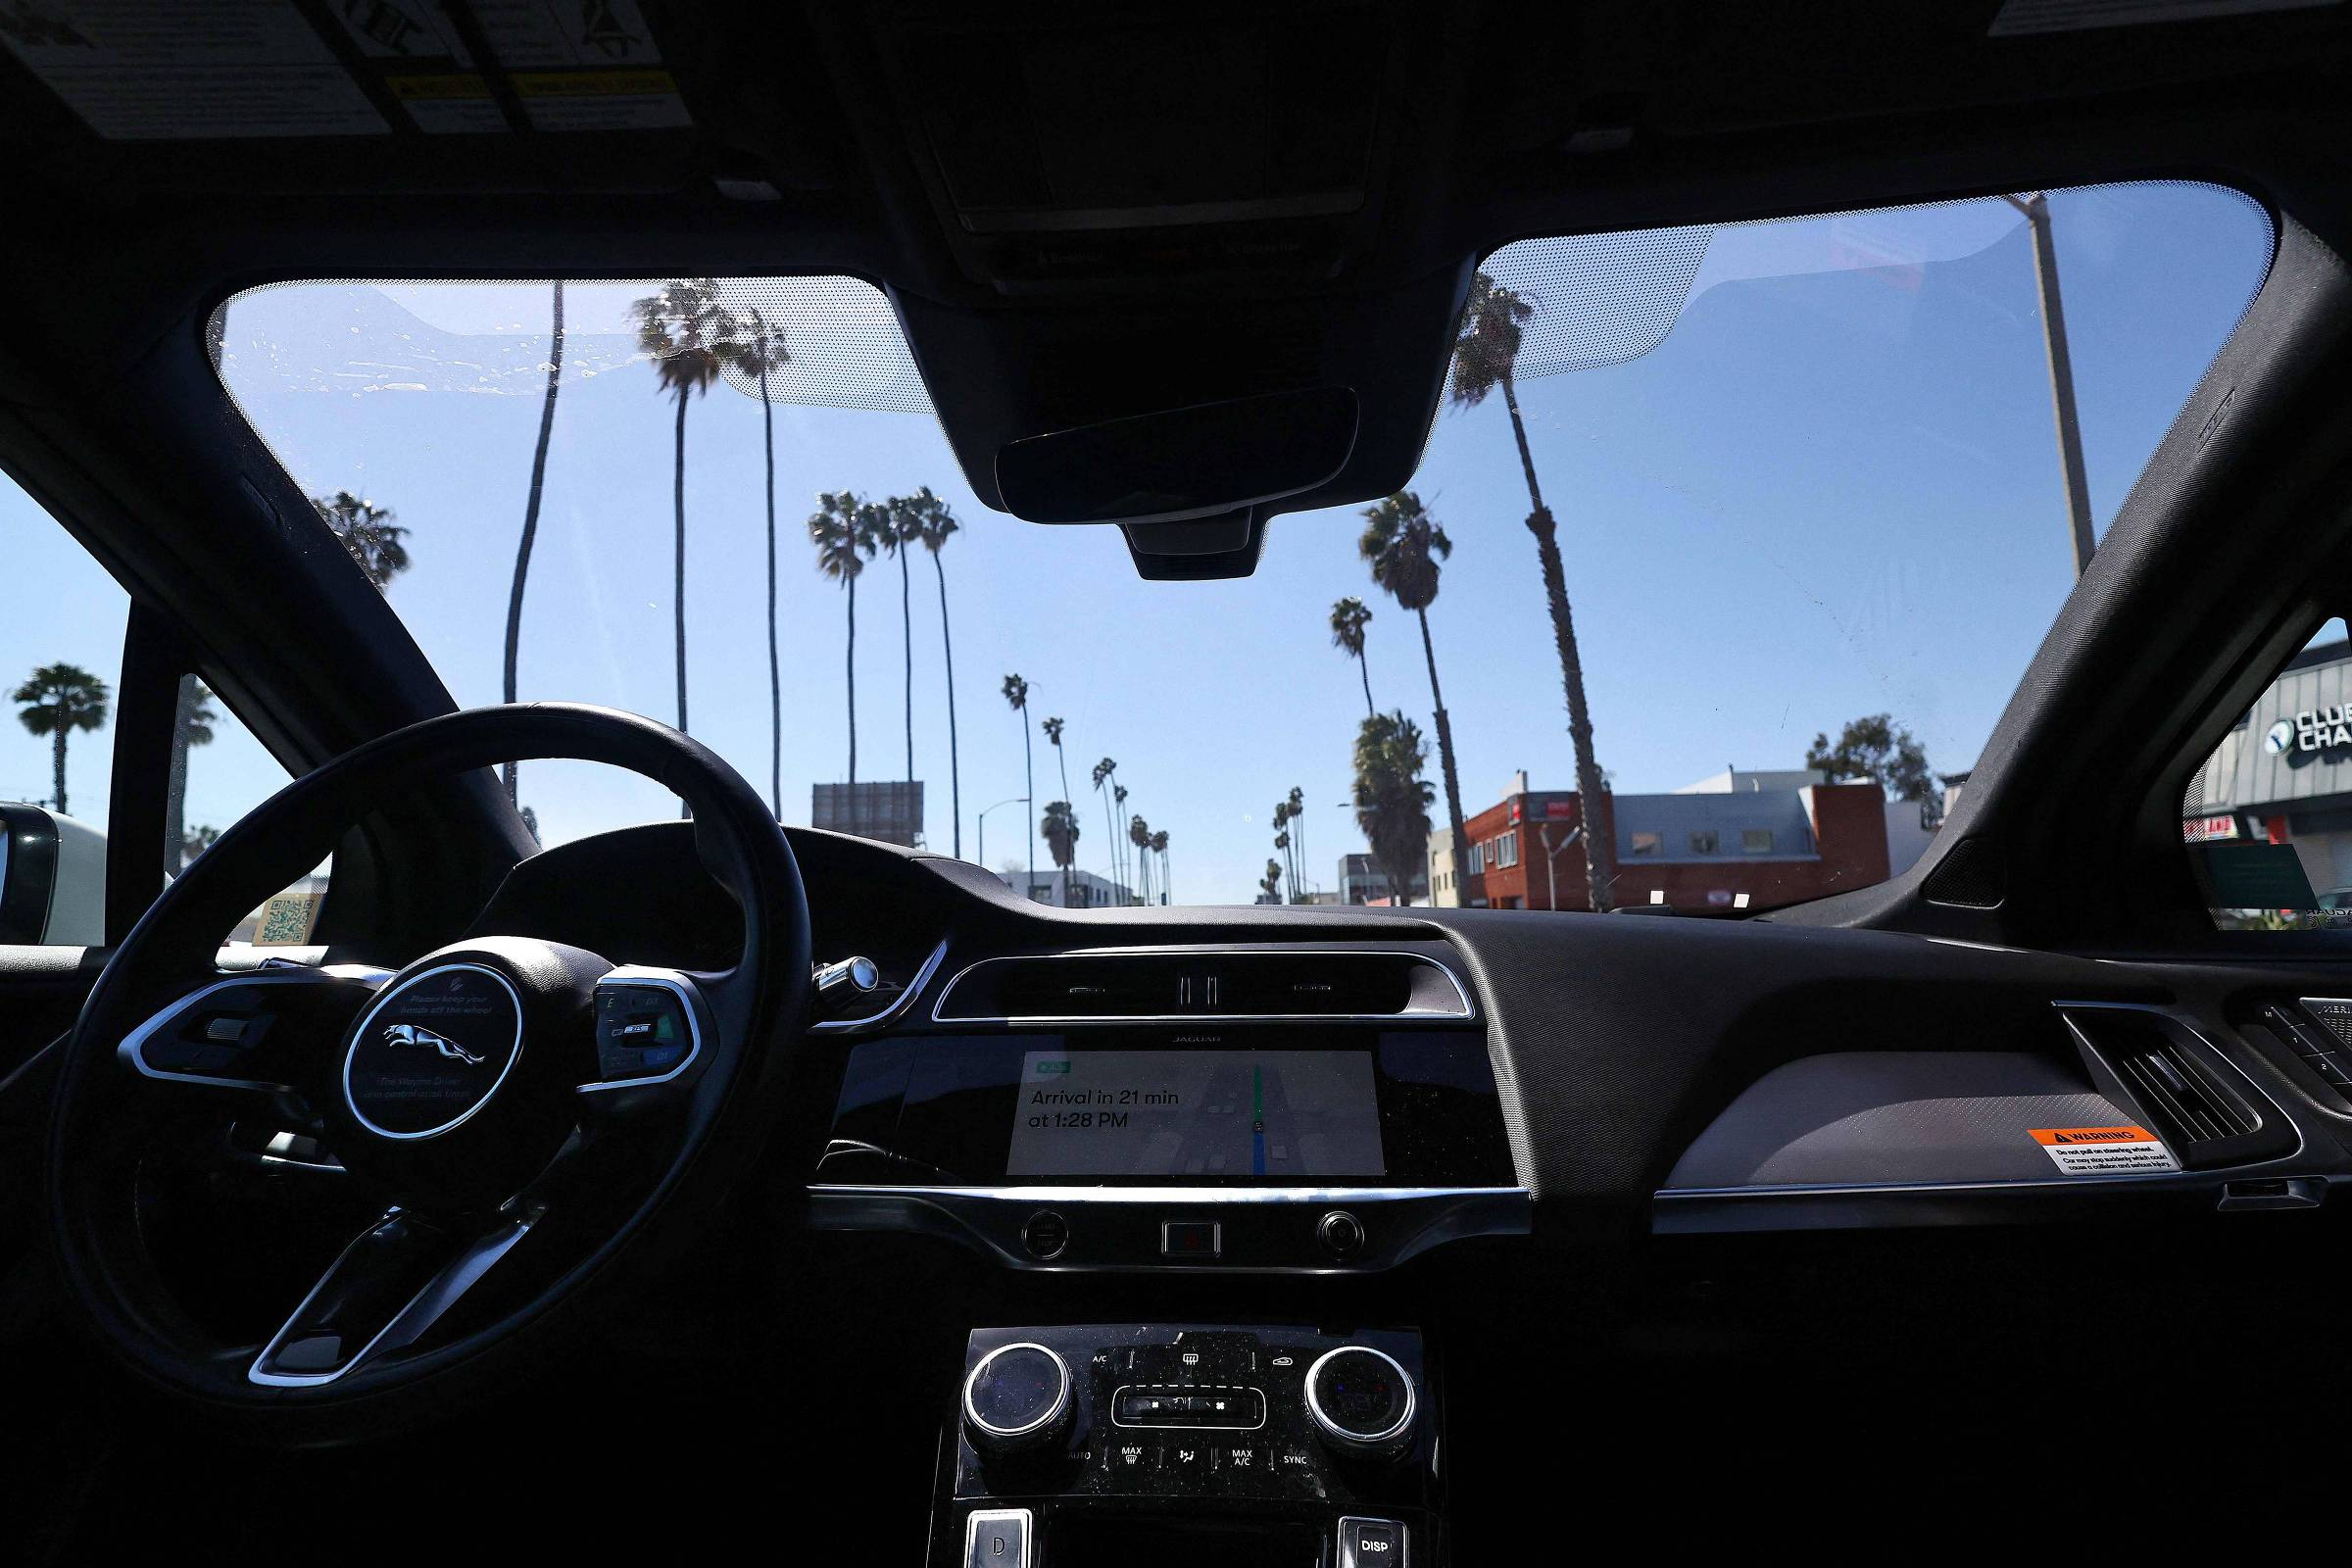 Como Los Angeles, a cidade obcecada por carros, encara os veículos autônomos